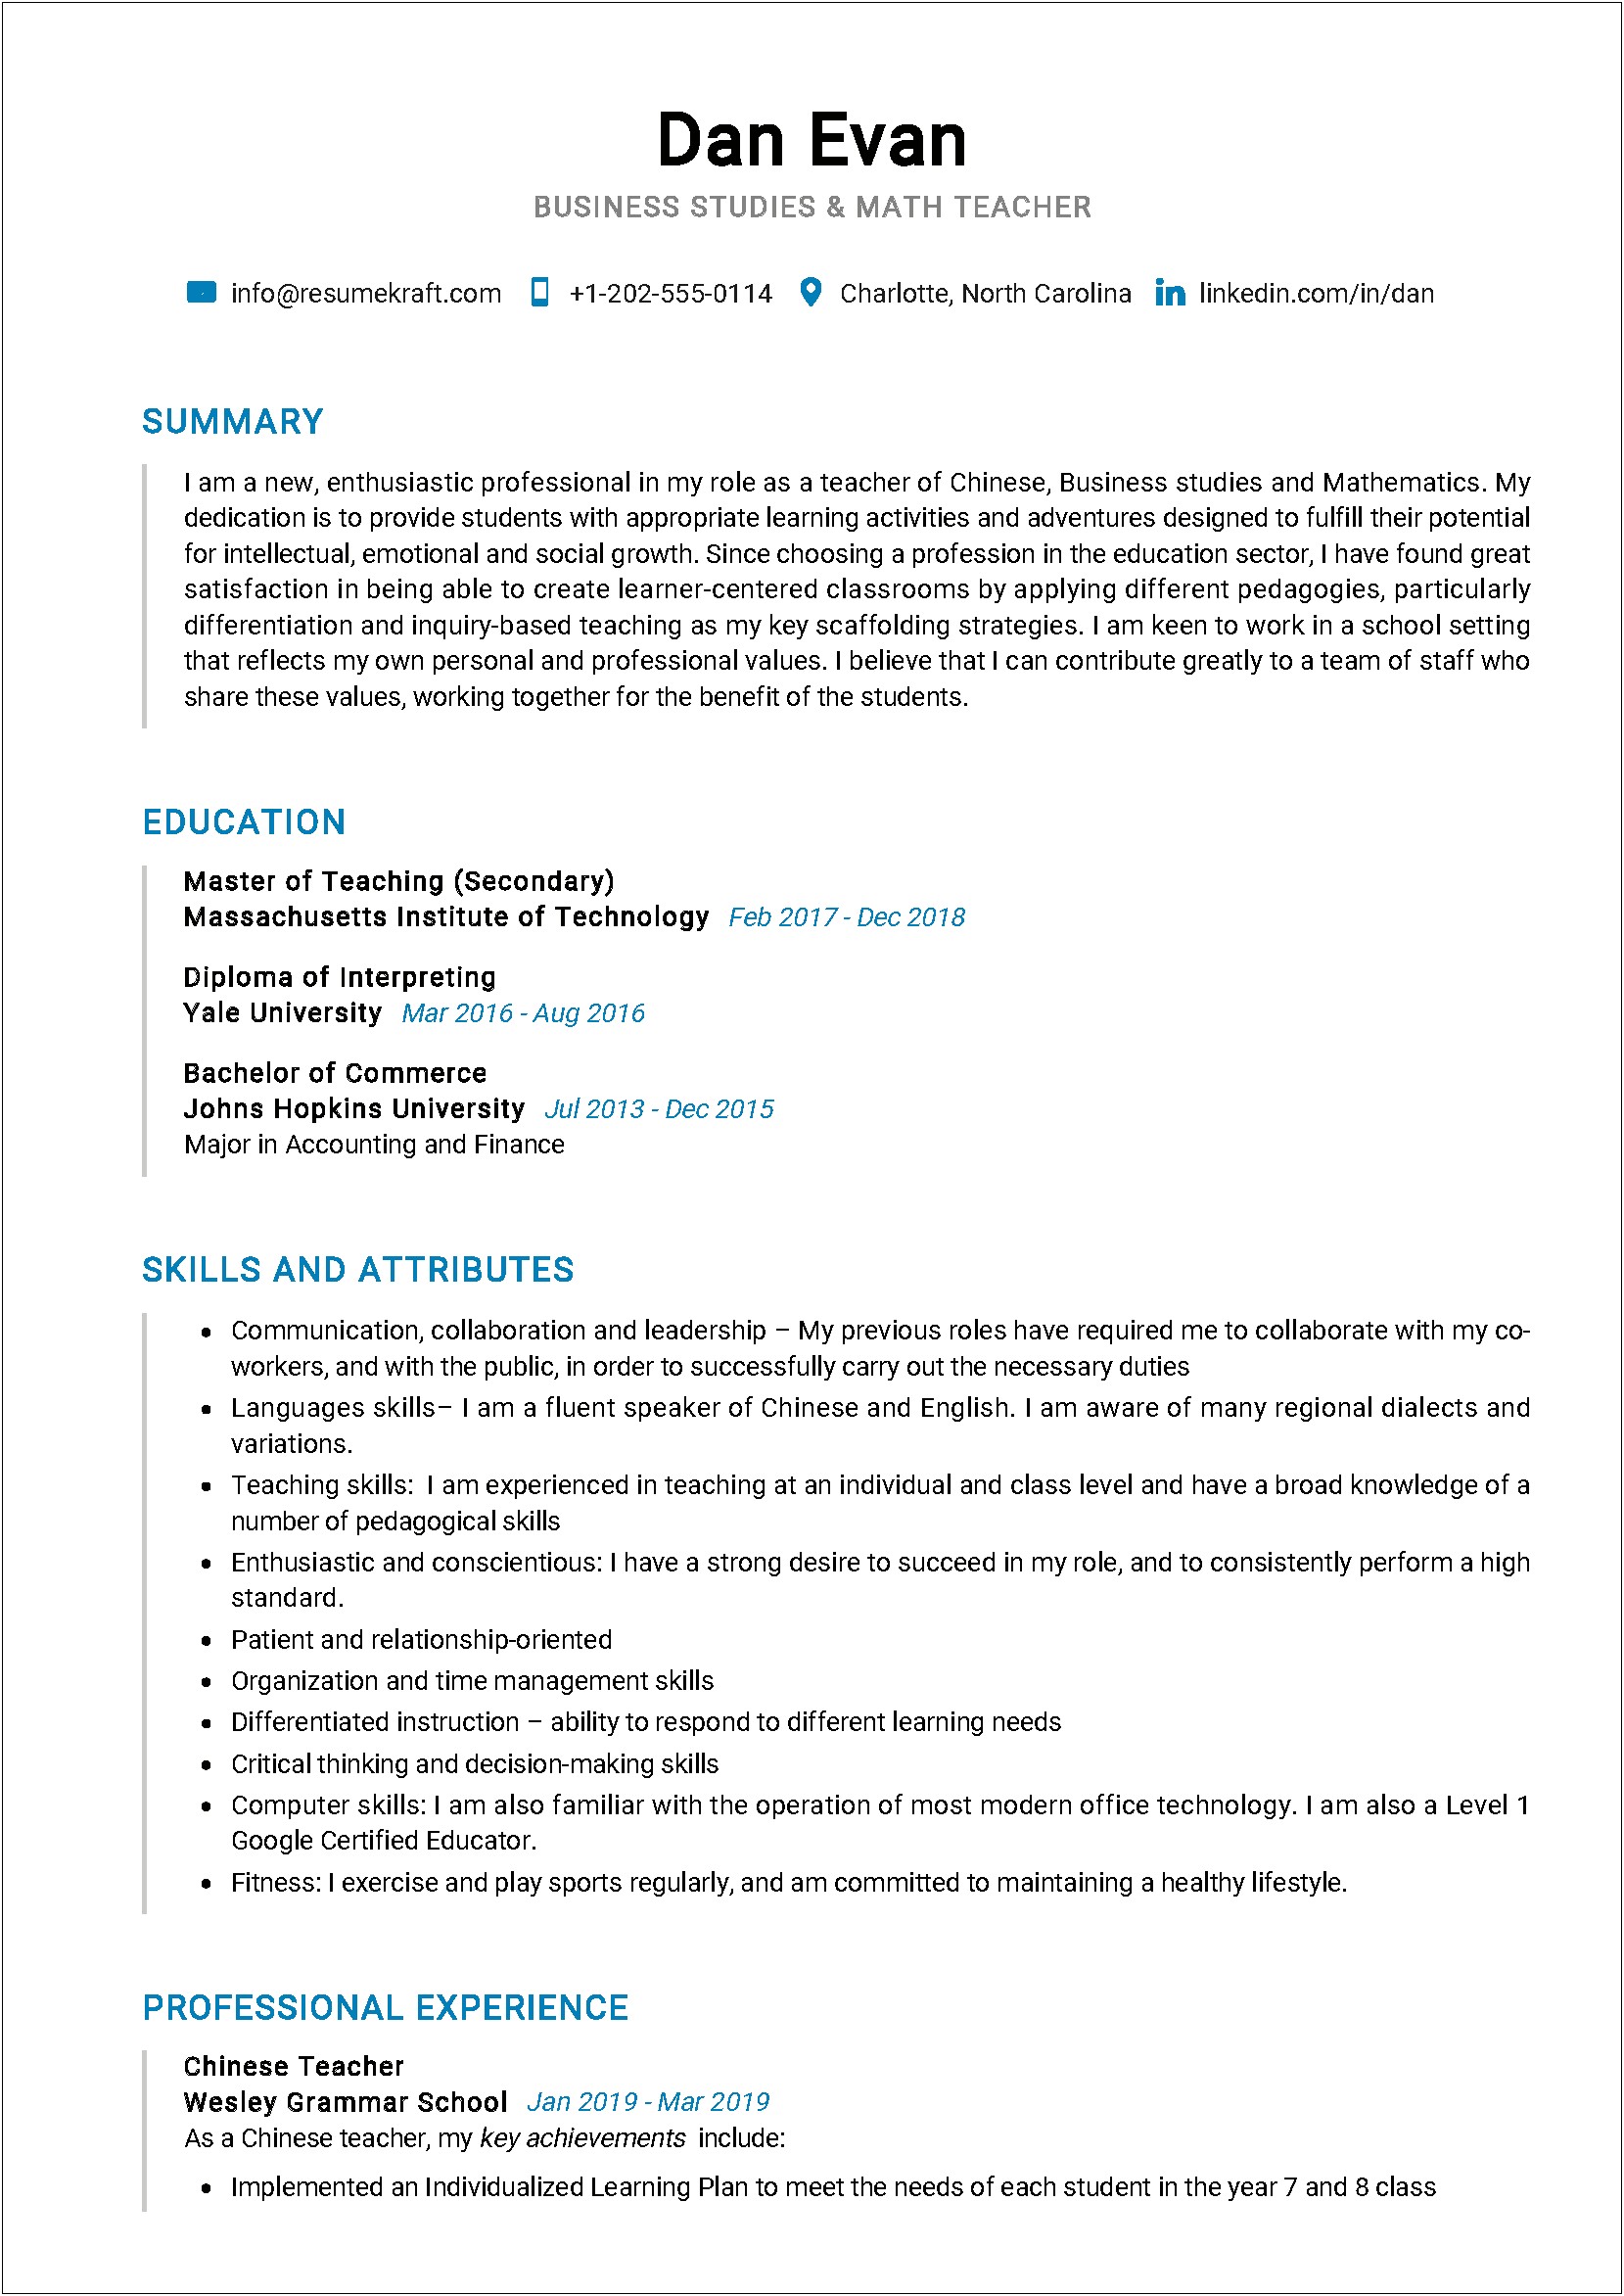 Sample Resume For Math Teaching Position